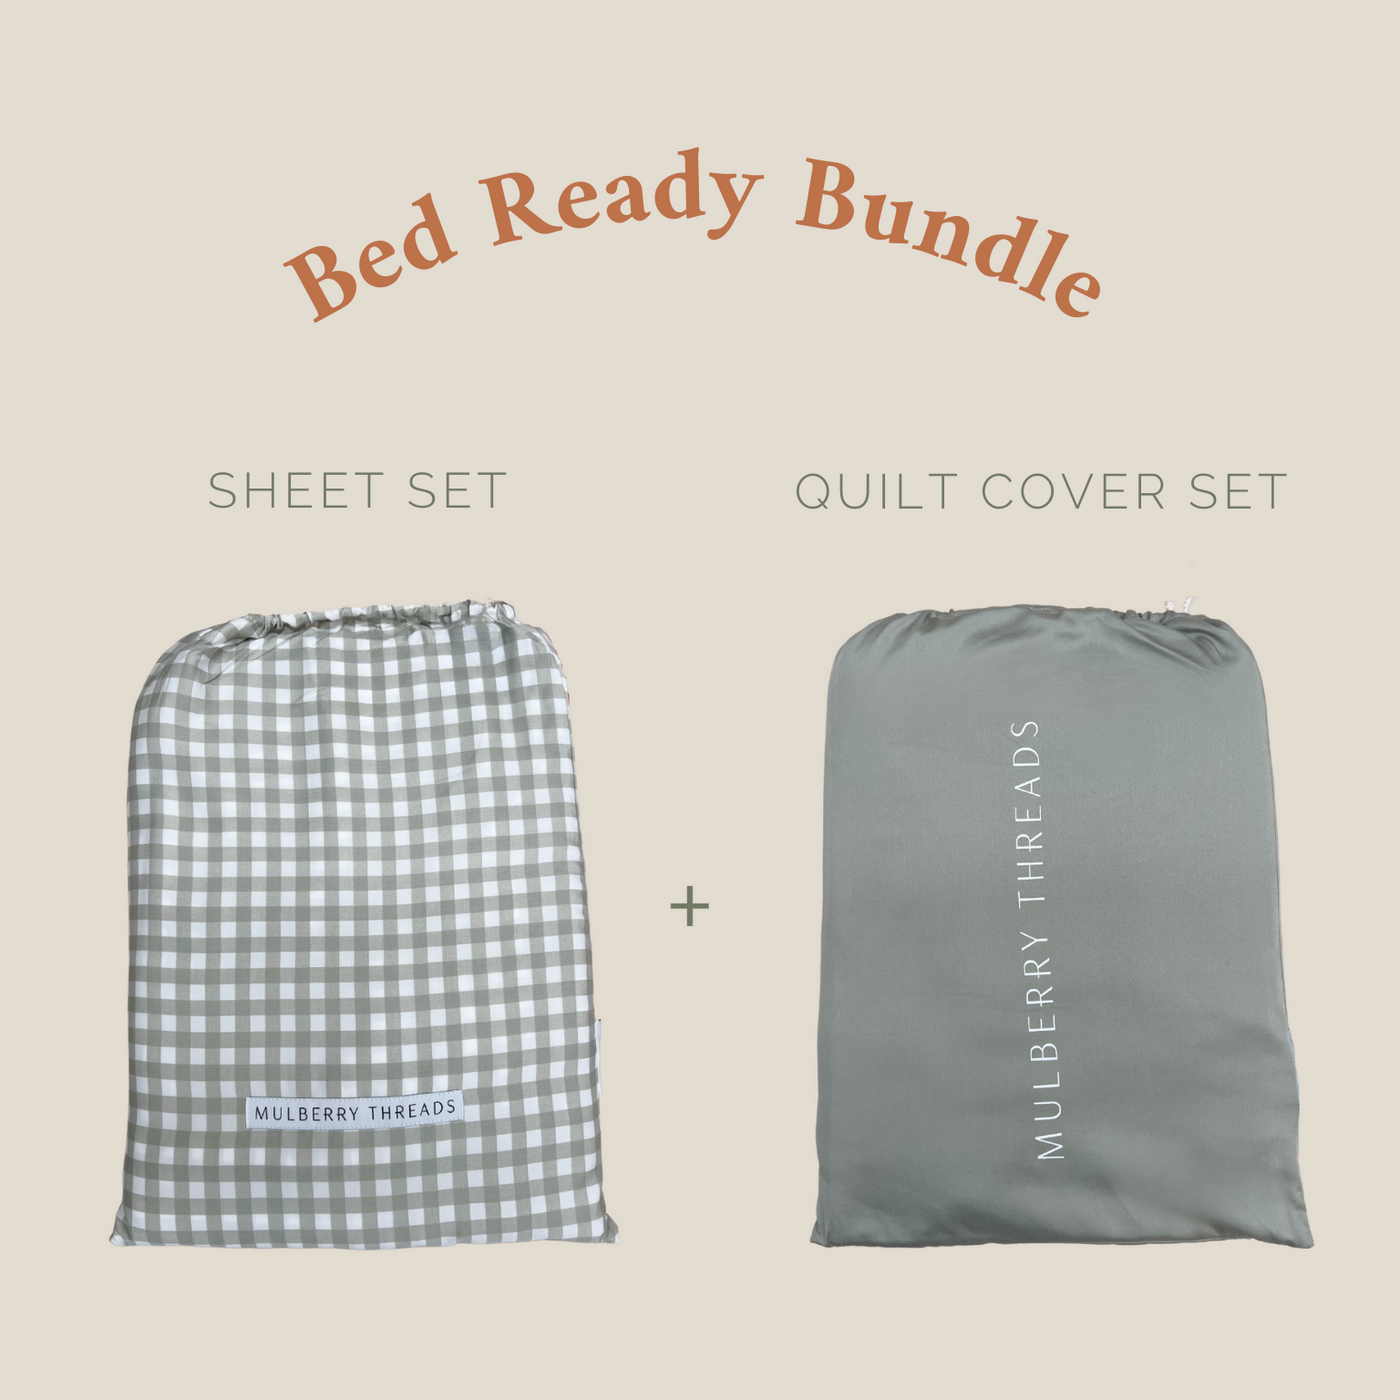 Bed Ready Bundle